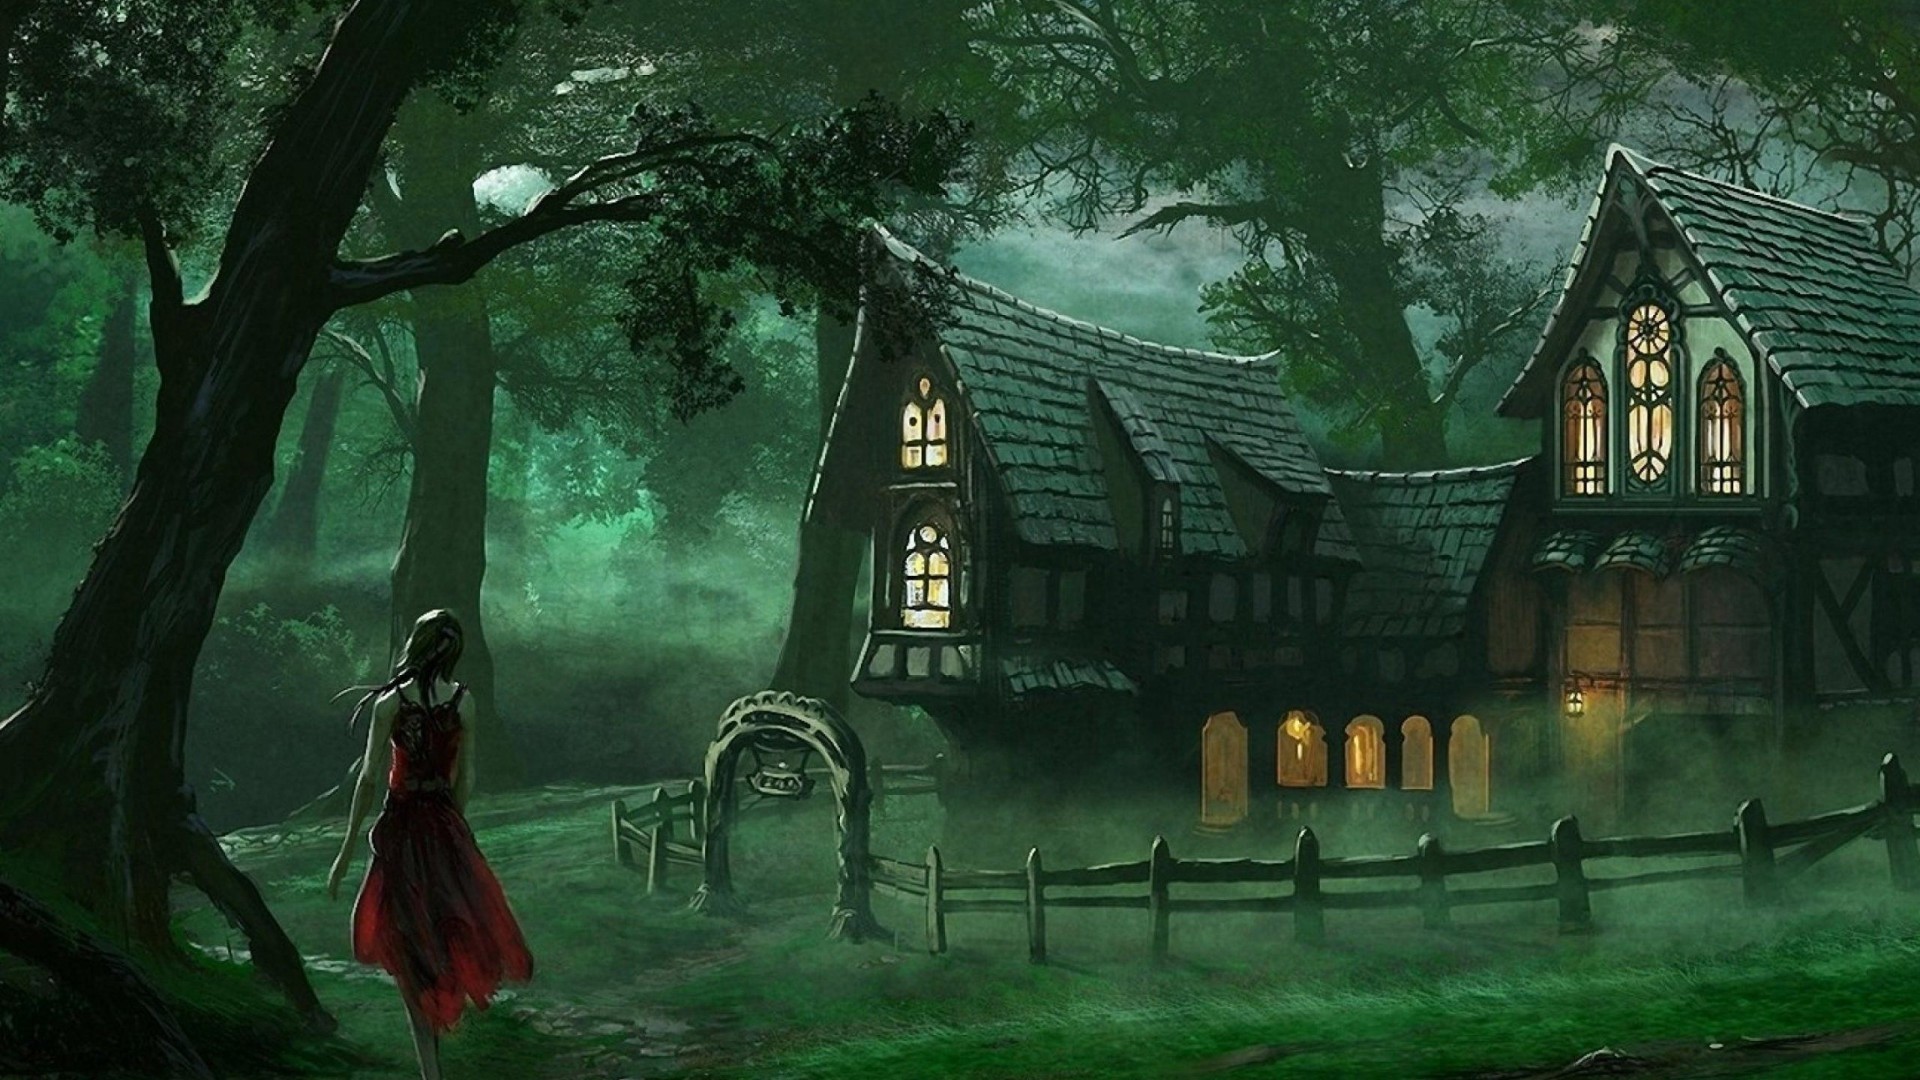 Spooky House Fantasy Forest wallpaper HD [1920 1080]